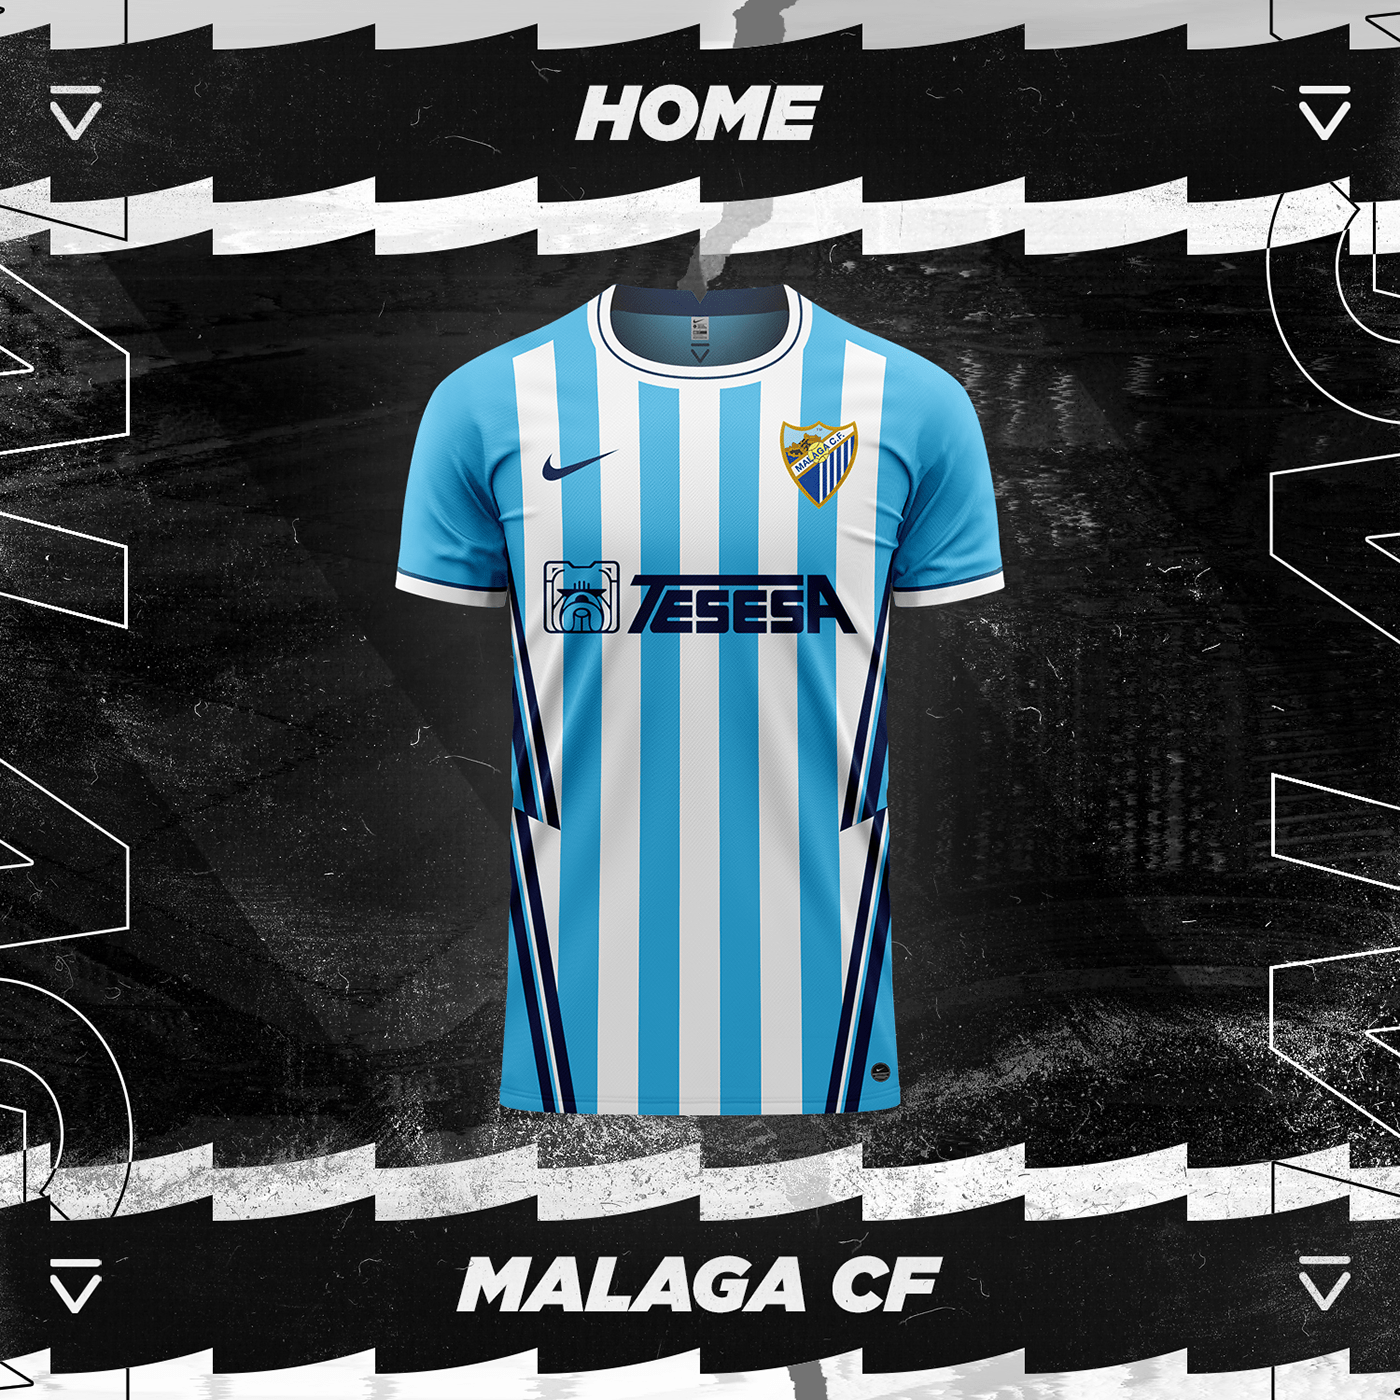 concept kit fantasy kit football football shirt la liga malaga Málaga cf Nike soccer soccer jersey